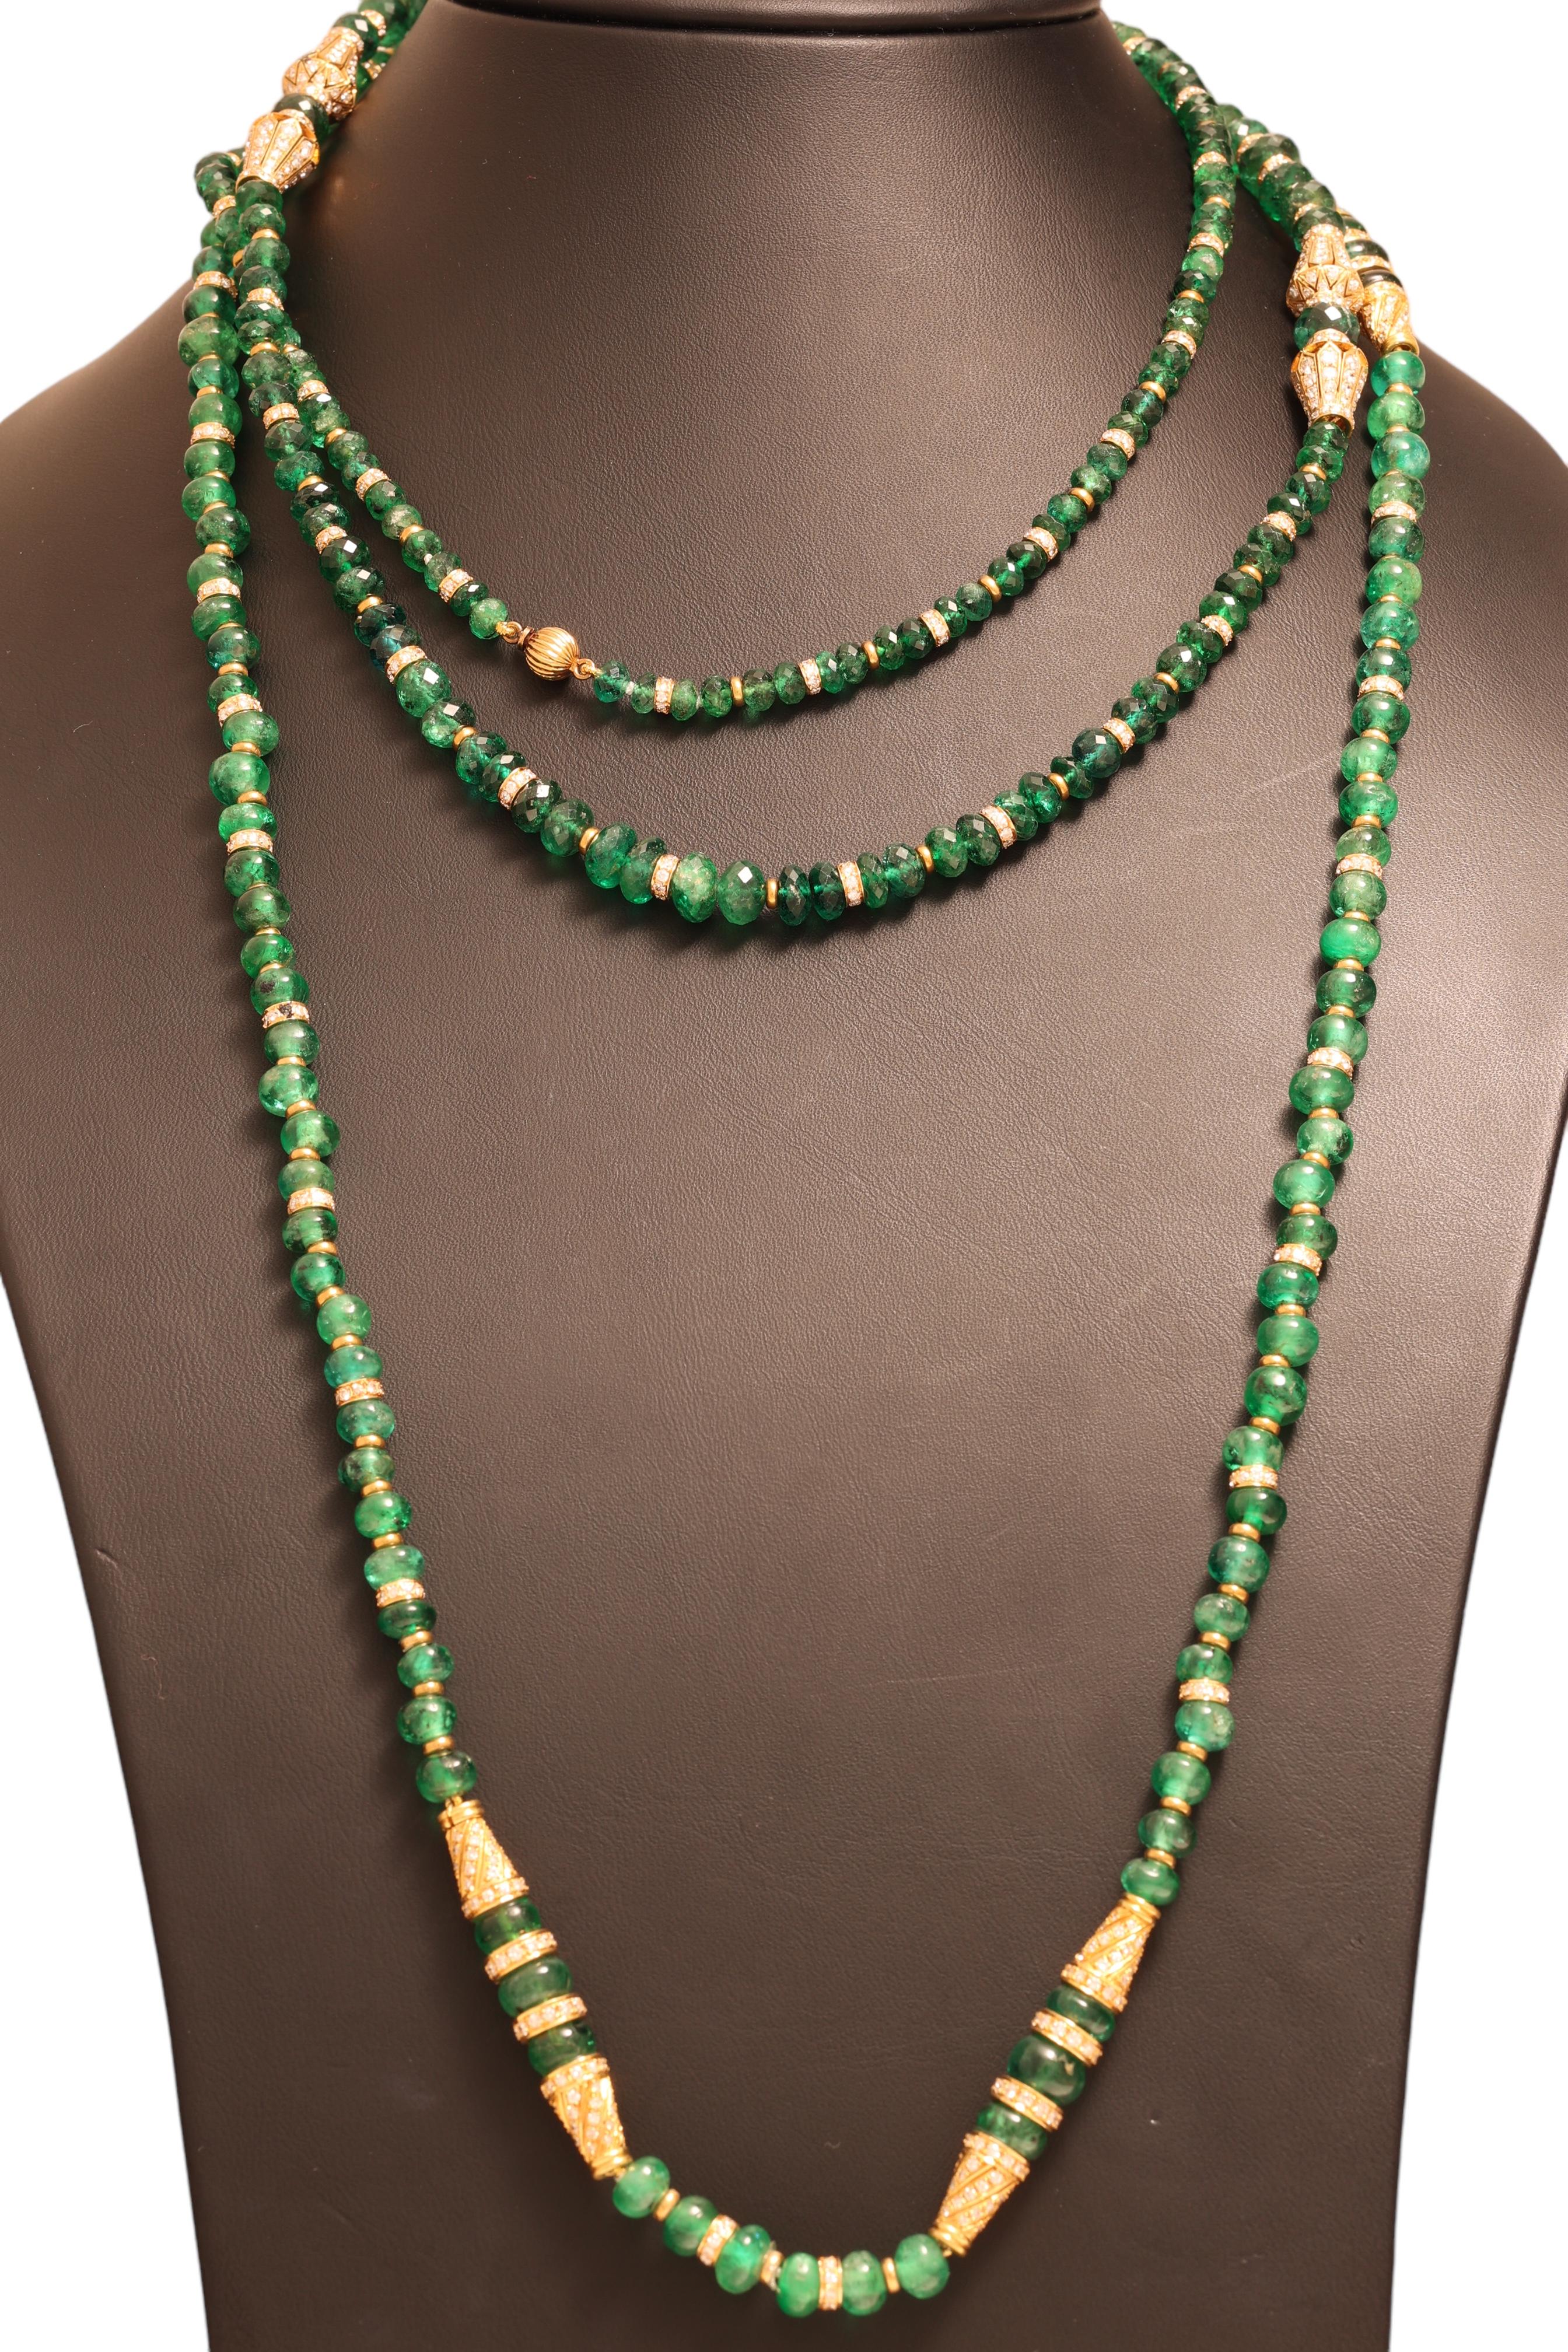 Adler Genèva 18kt Gold Necklaces 480ct Faceted Bead Emeralds CGL Certified For Sale 4